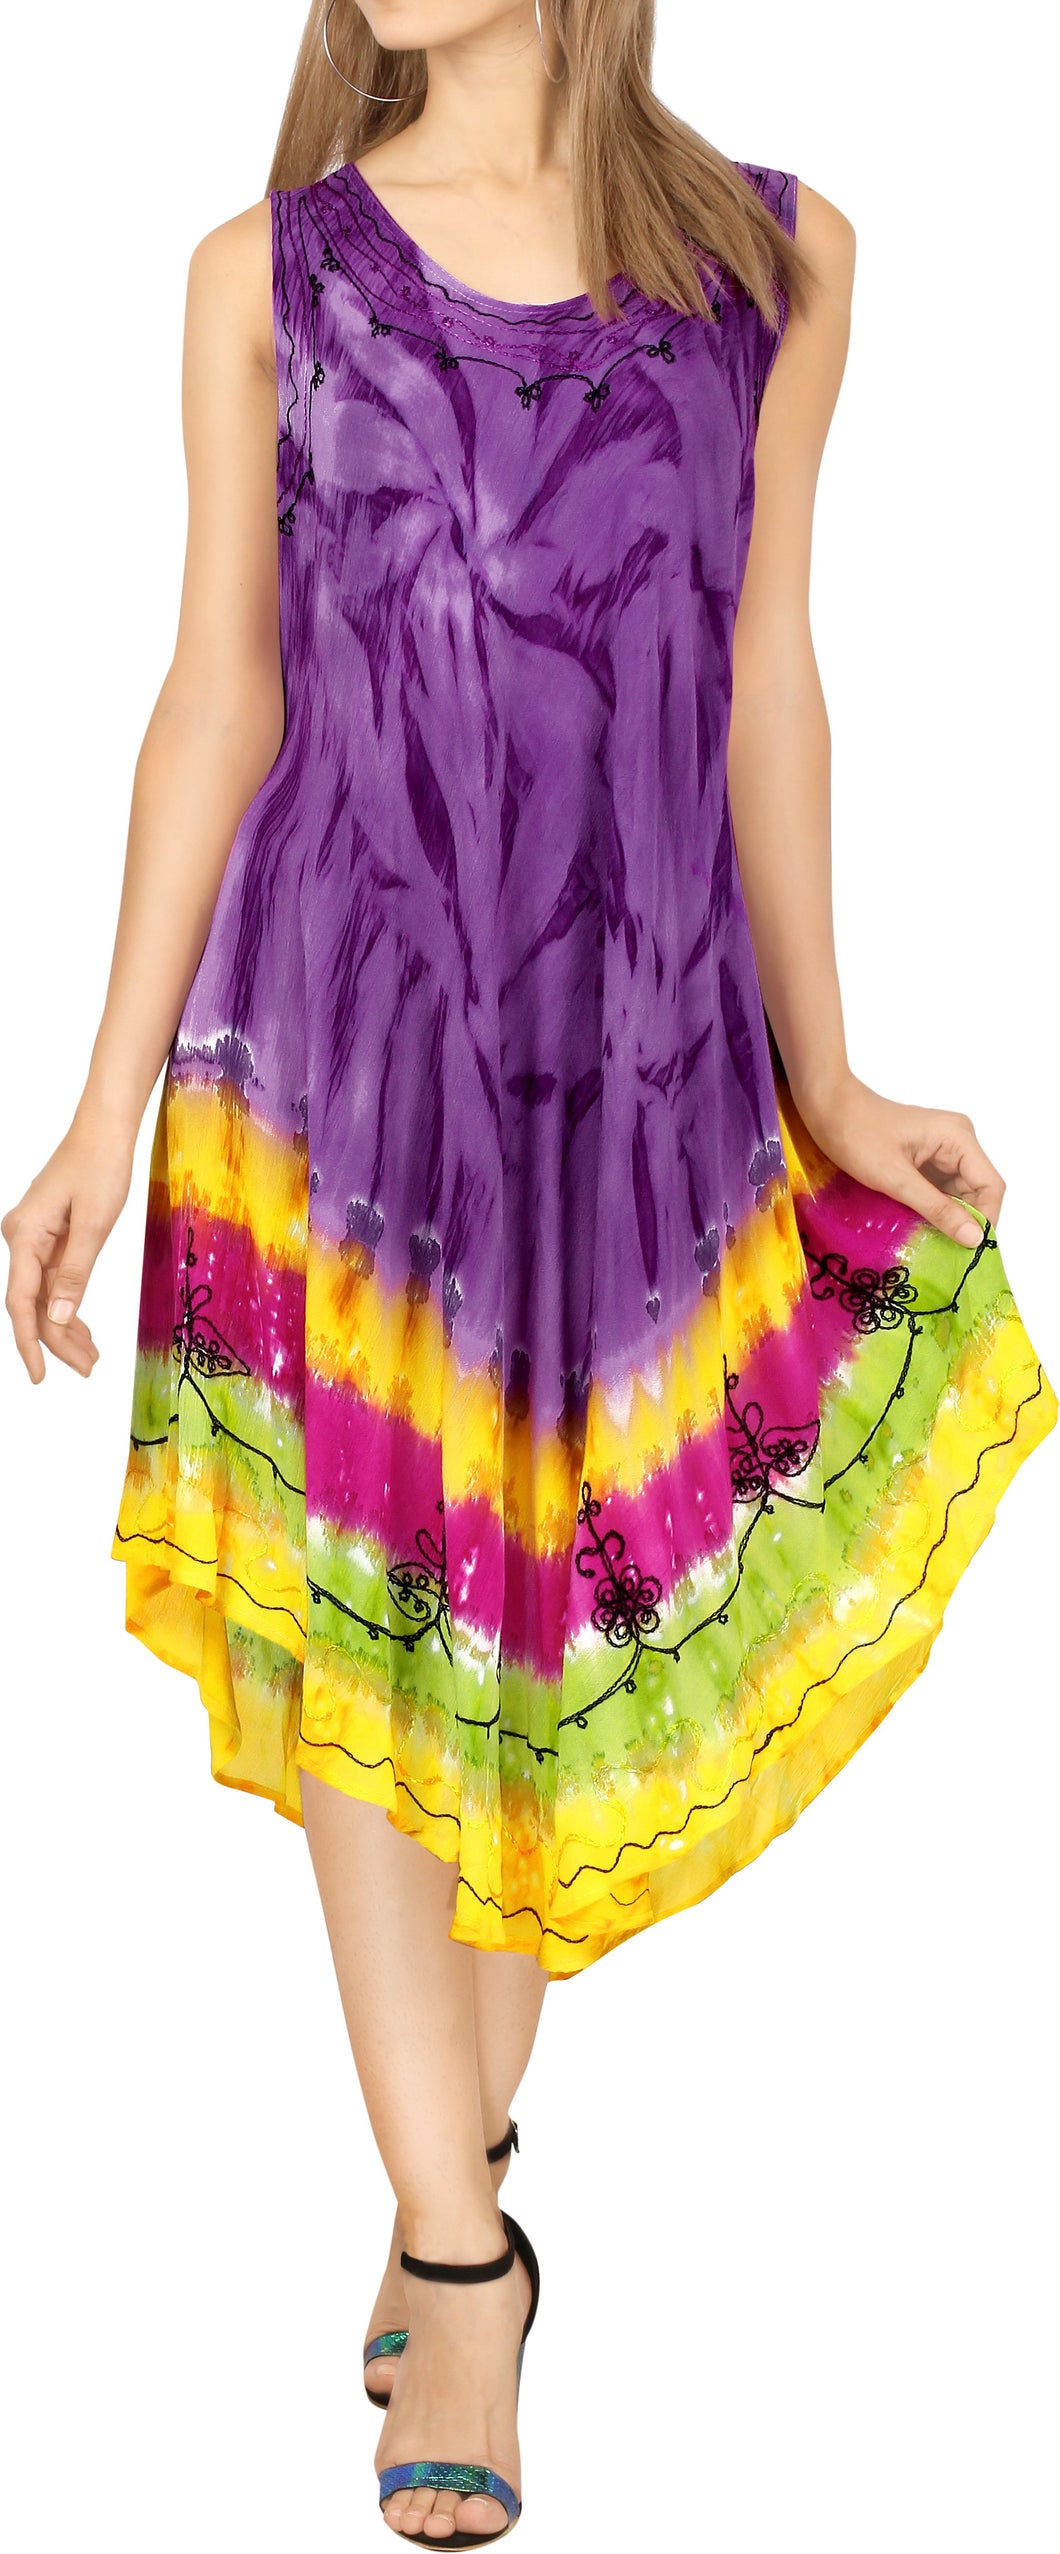 LA LEELA Floral Caftan Beach Dress Cover up for Women Violet_Y886 US Size 14 - 2